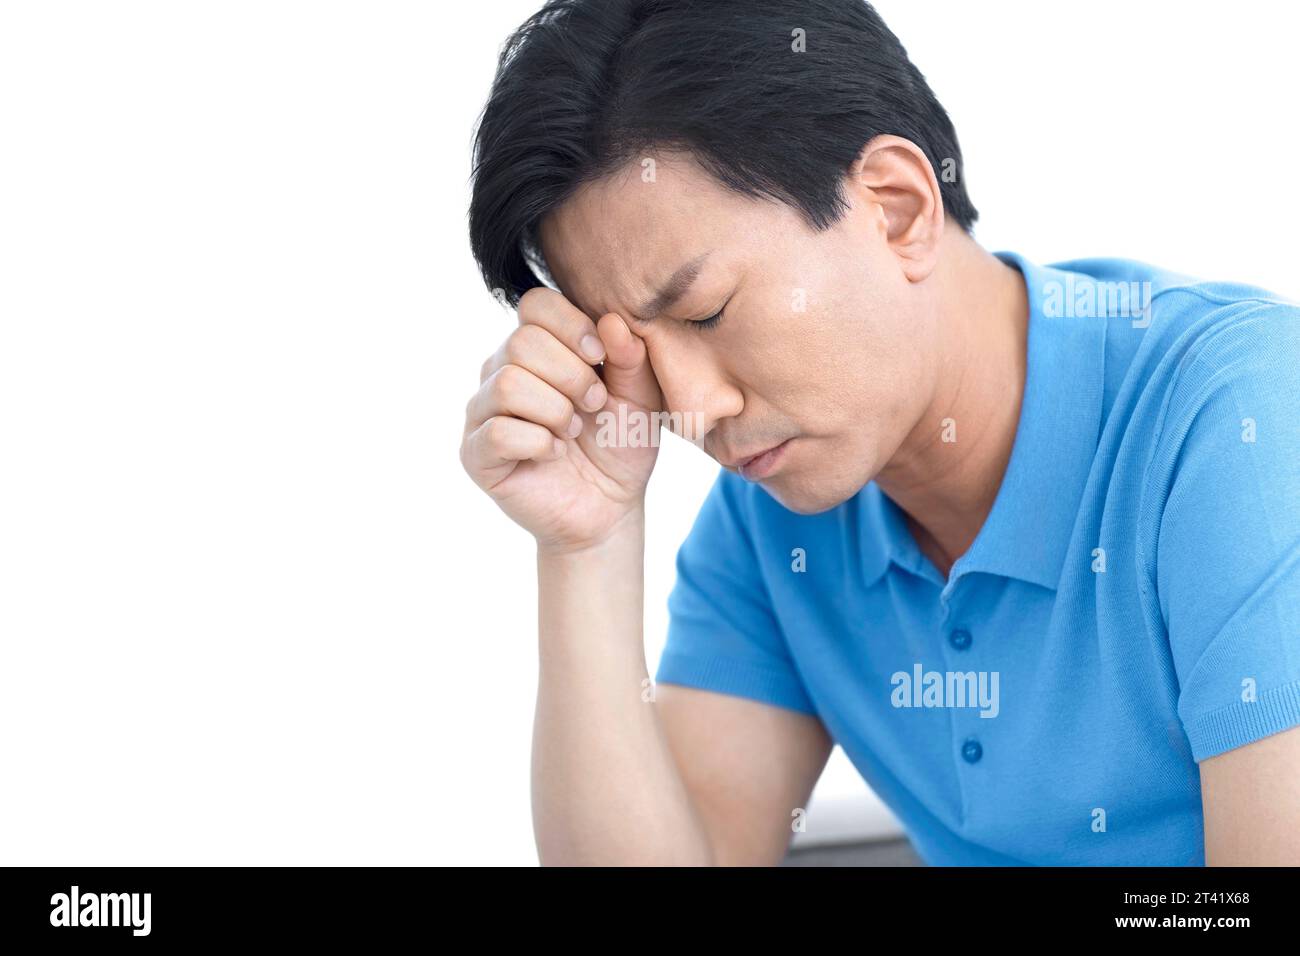 Man rubbing his eye Stock Photo